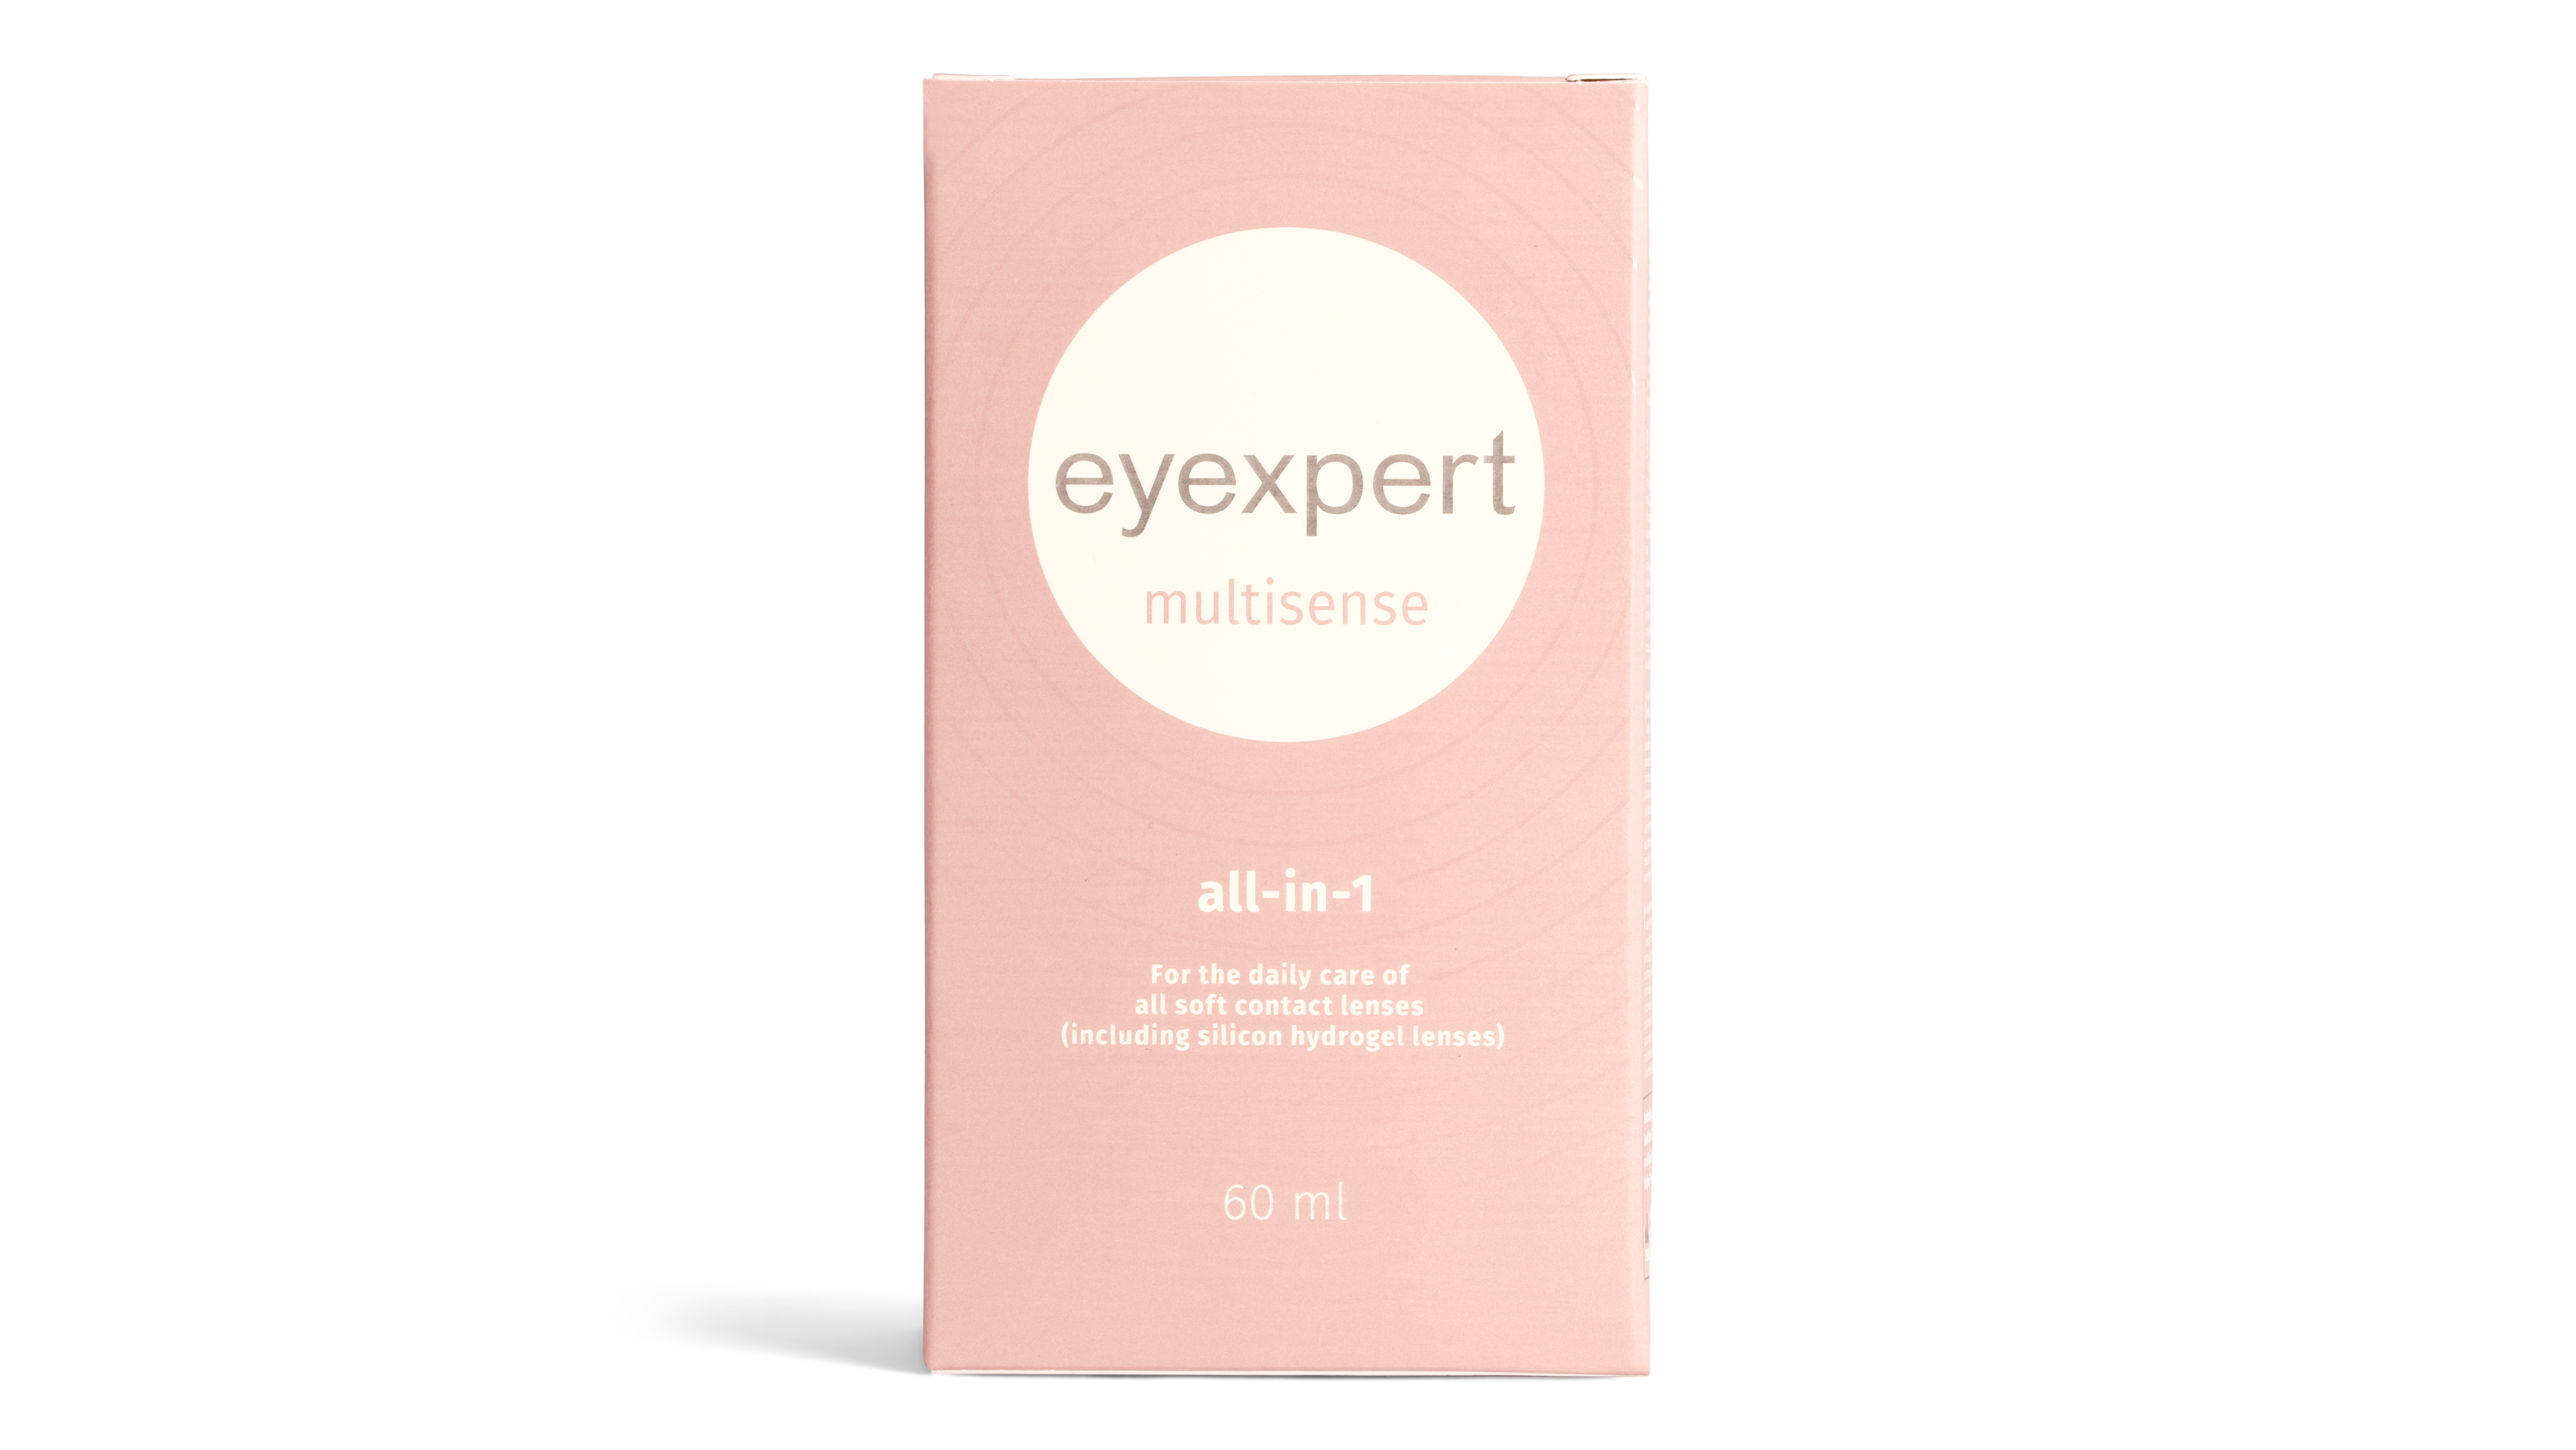 Front EYEXPERT Eyexpert multisense 60ml 60 ml